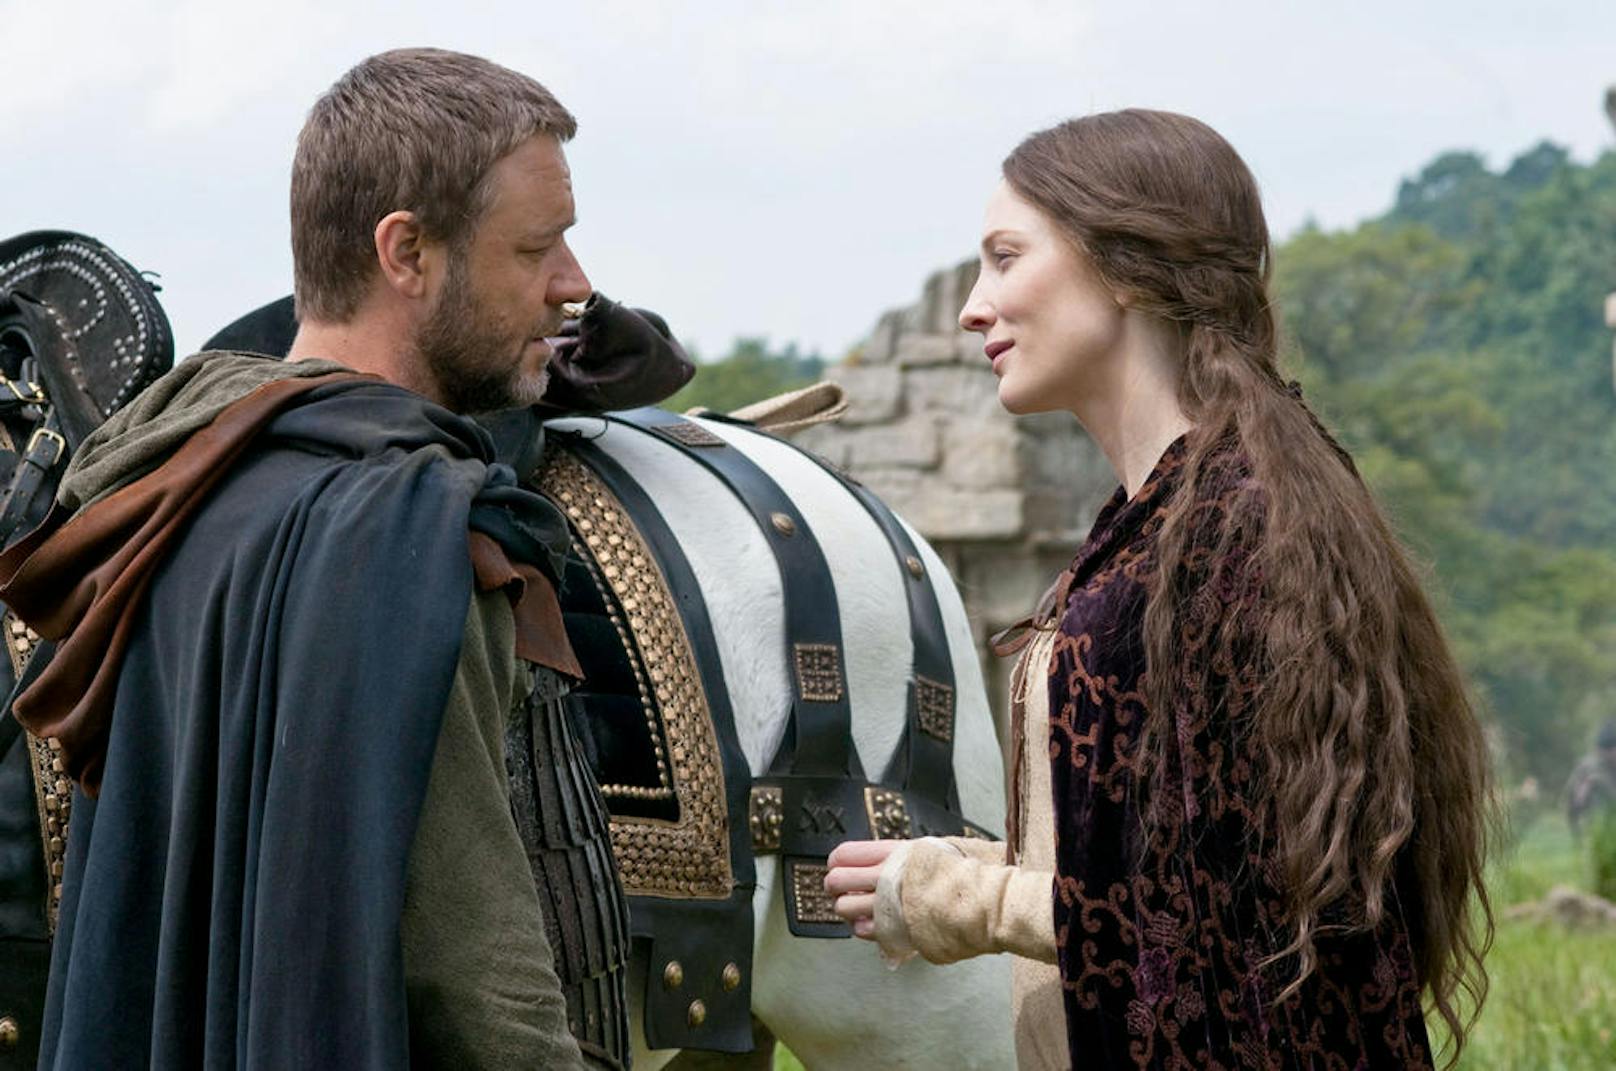 Russell Crowe und Cate Blanchett in "Robin Hood" (2010)